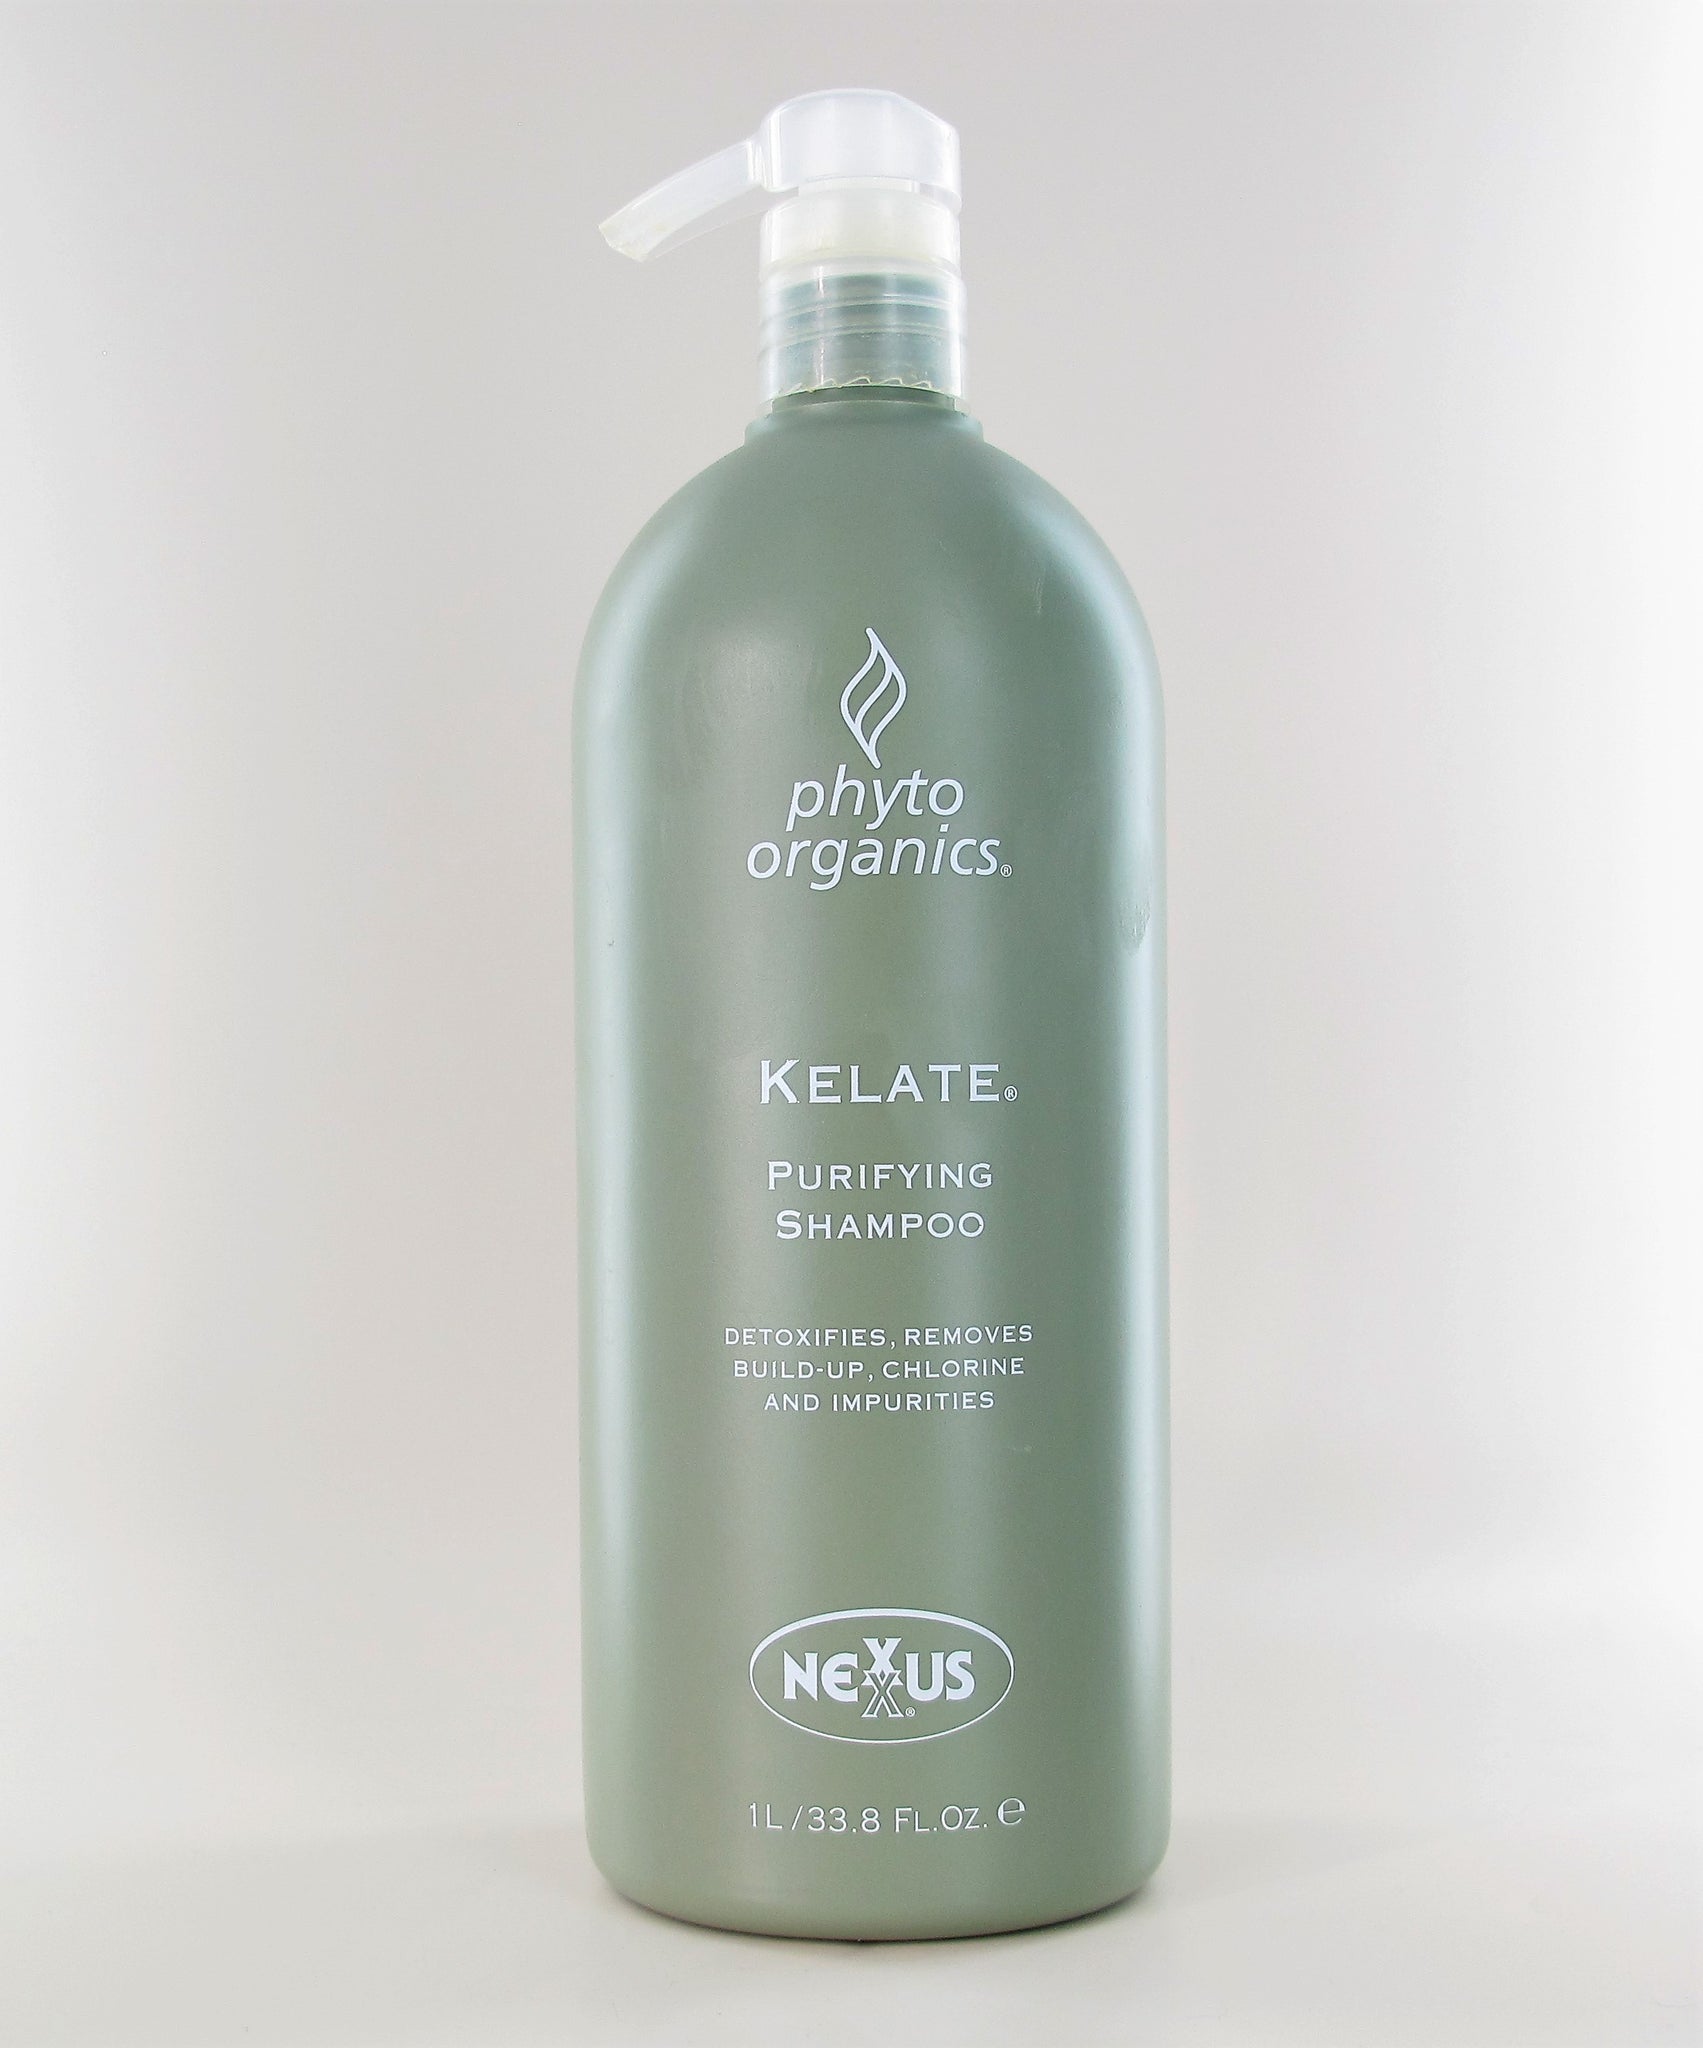 Nexxus Phyto Organics Kelate Purifying Shampoo 33.8 fl oz